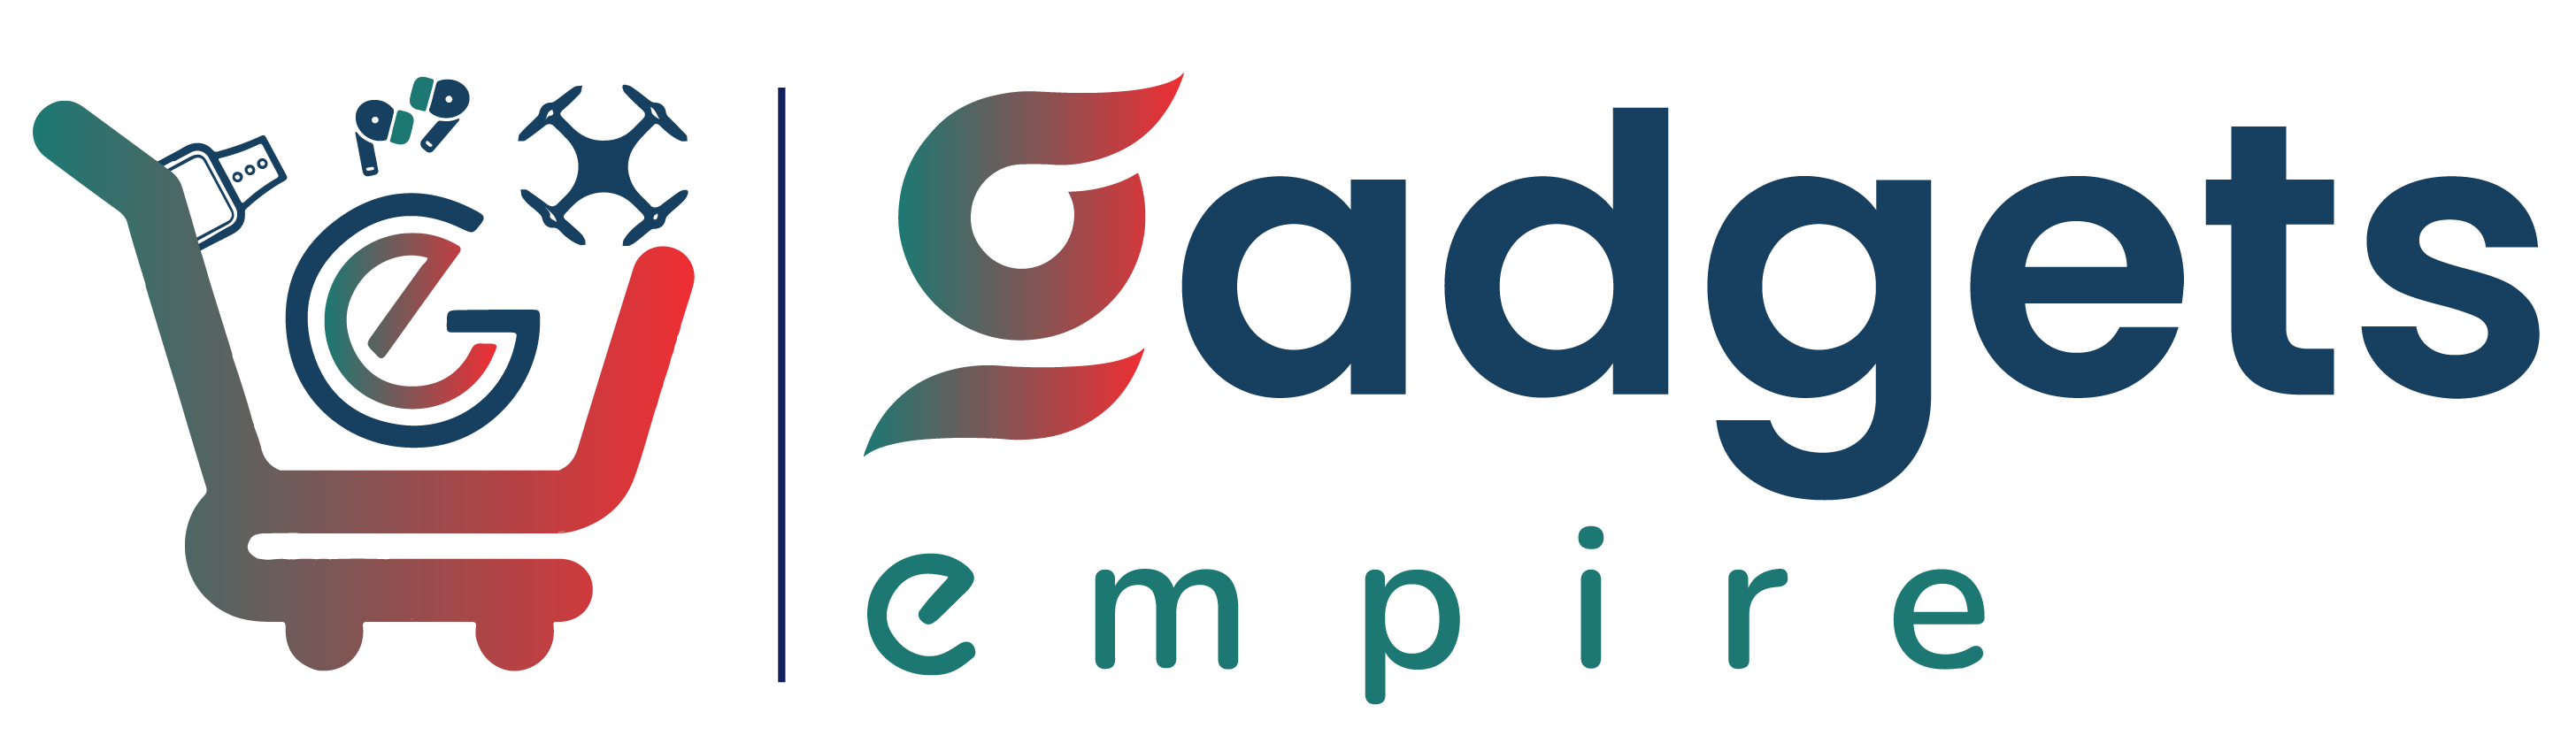 GadgetsEmpire